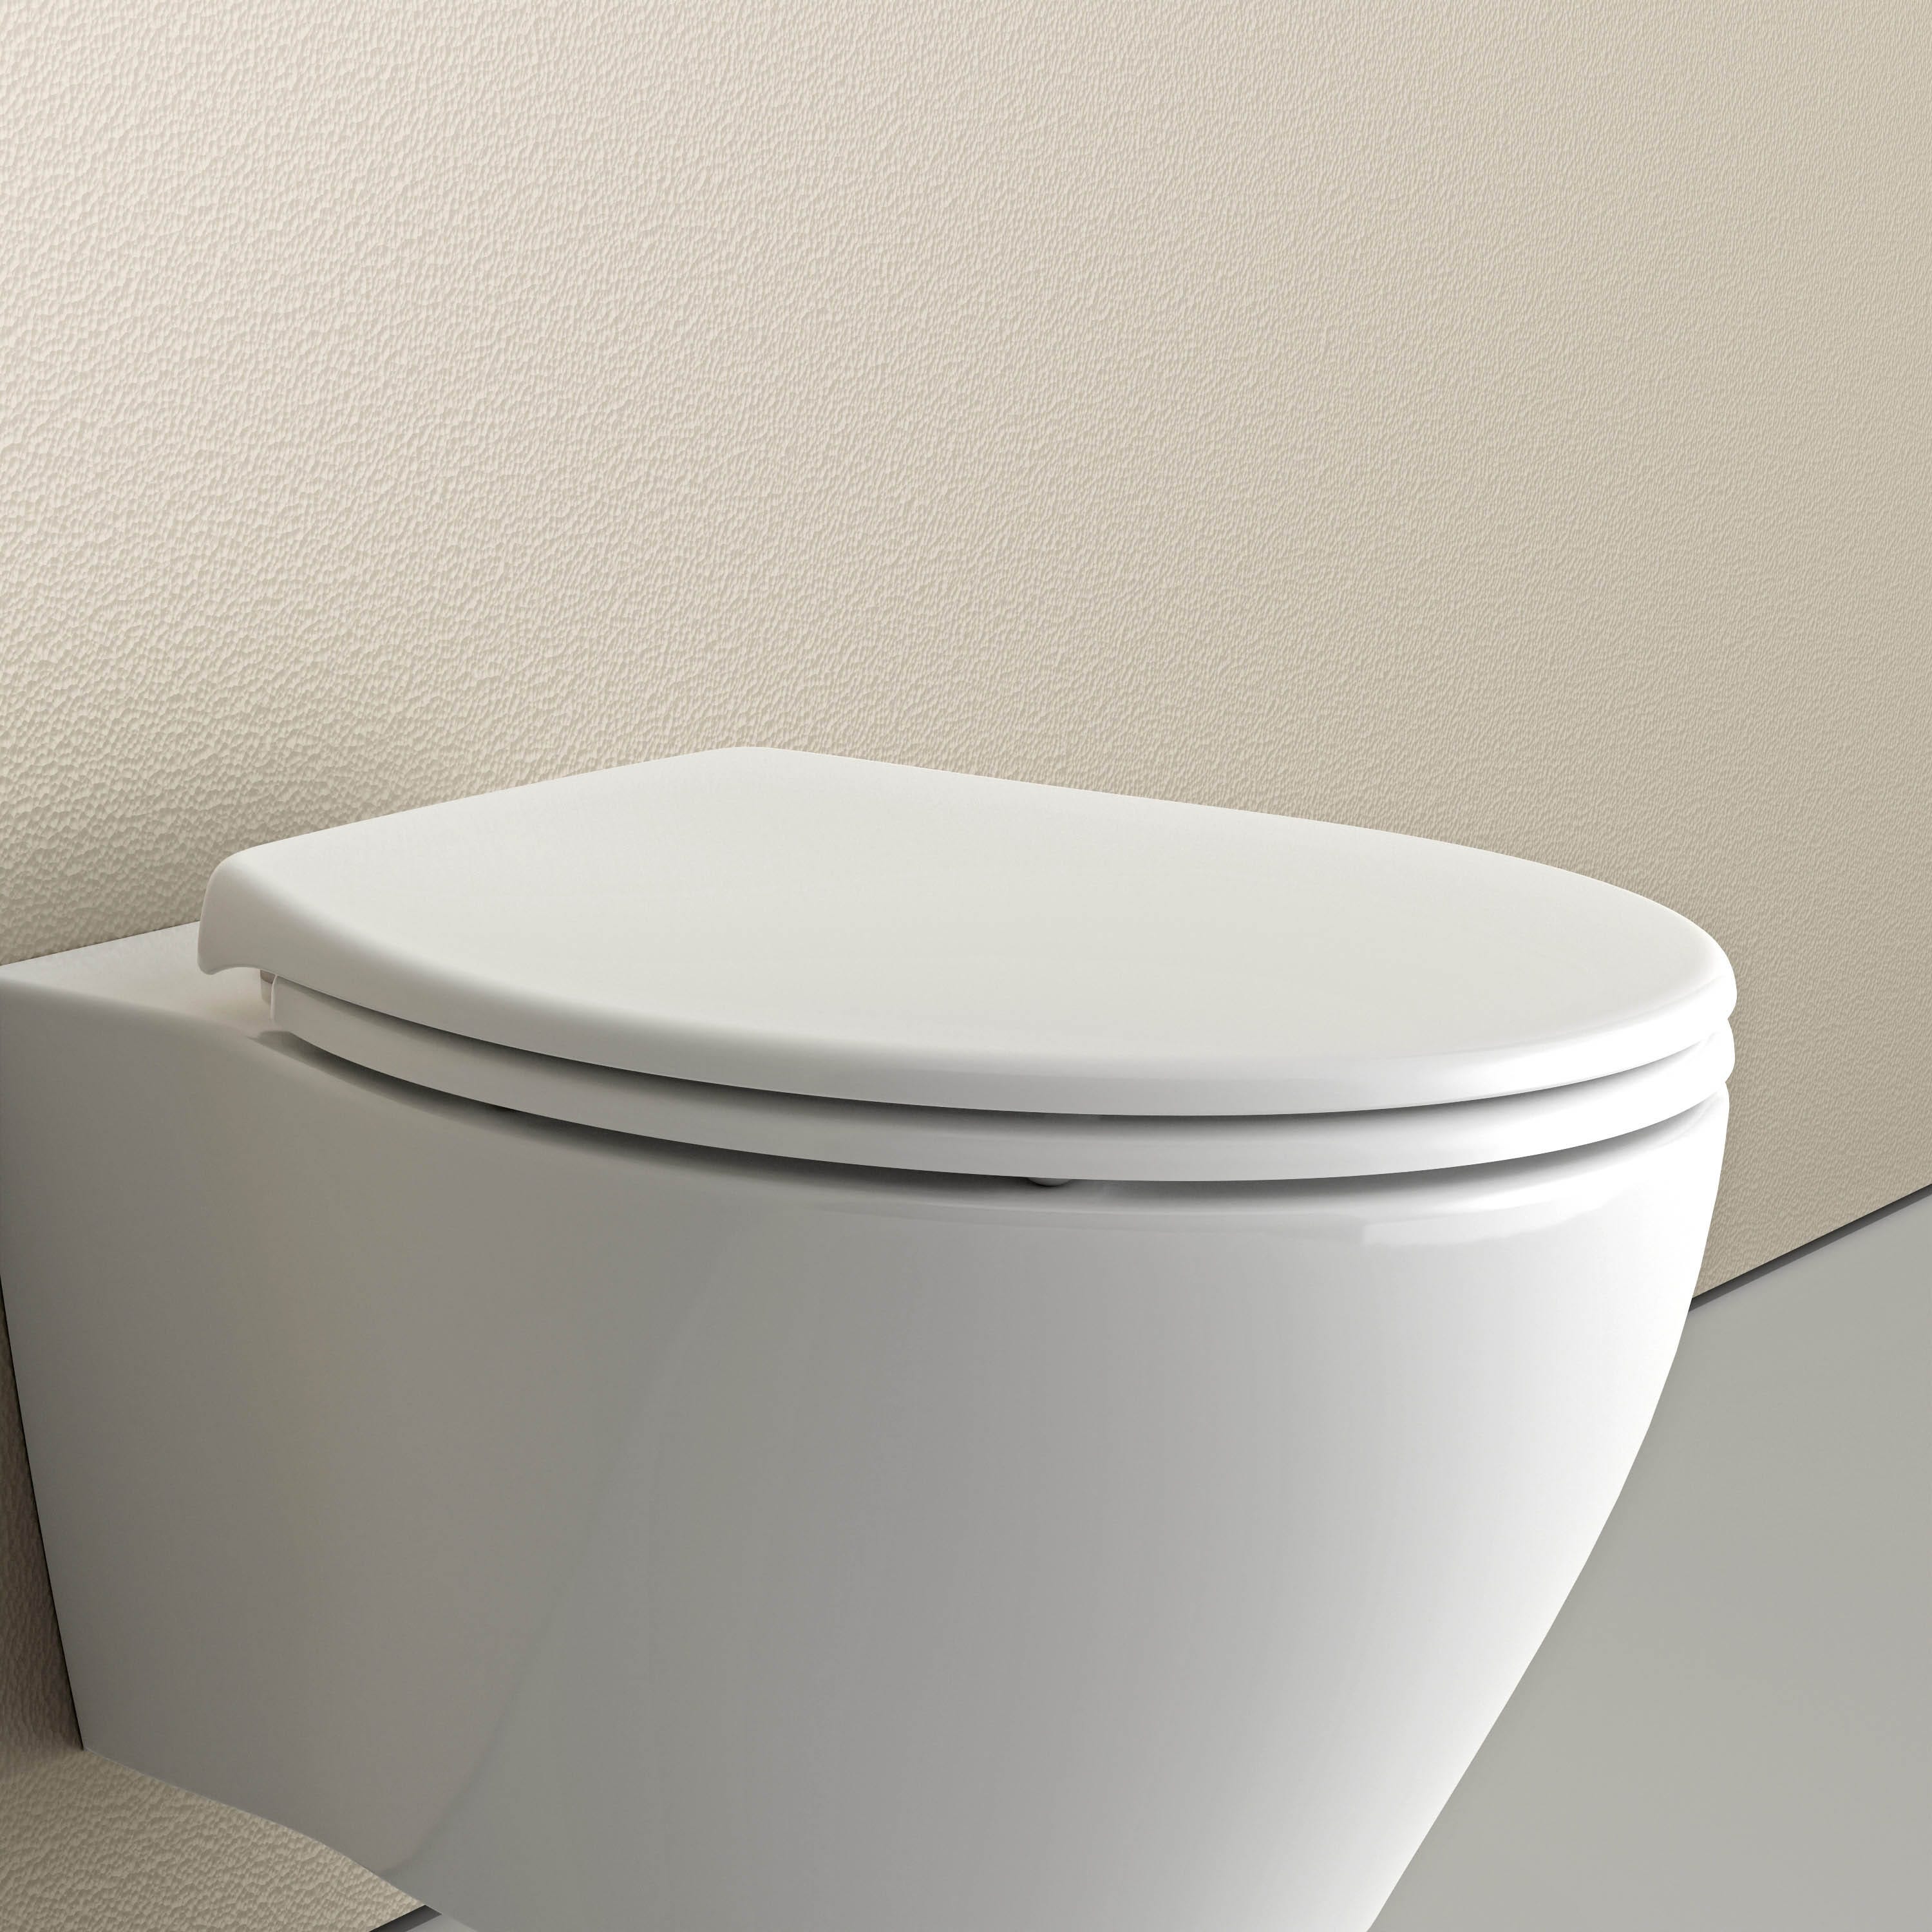 BERNSTEIN - Abattant WC plastique Lunette WC moderne, Cuvette